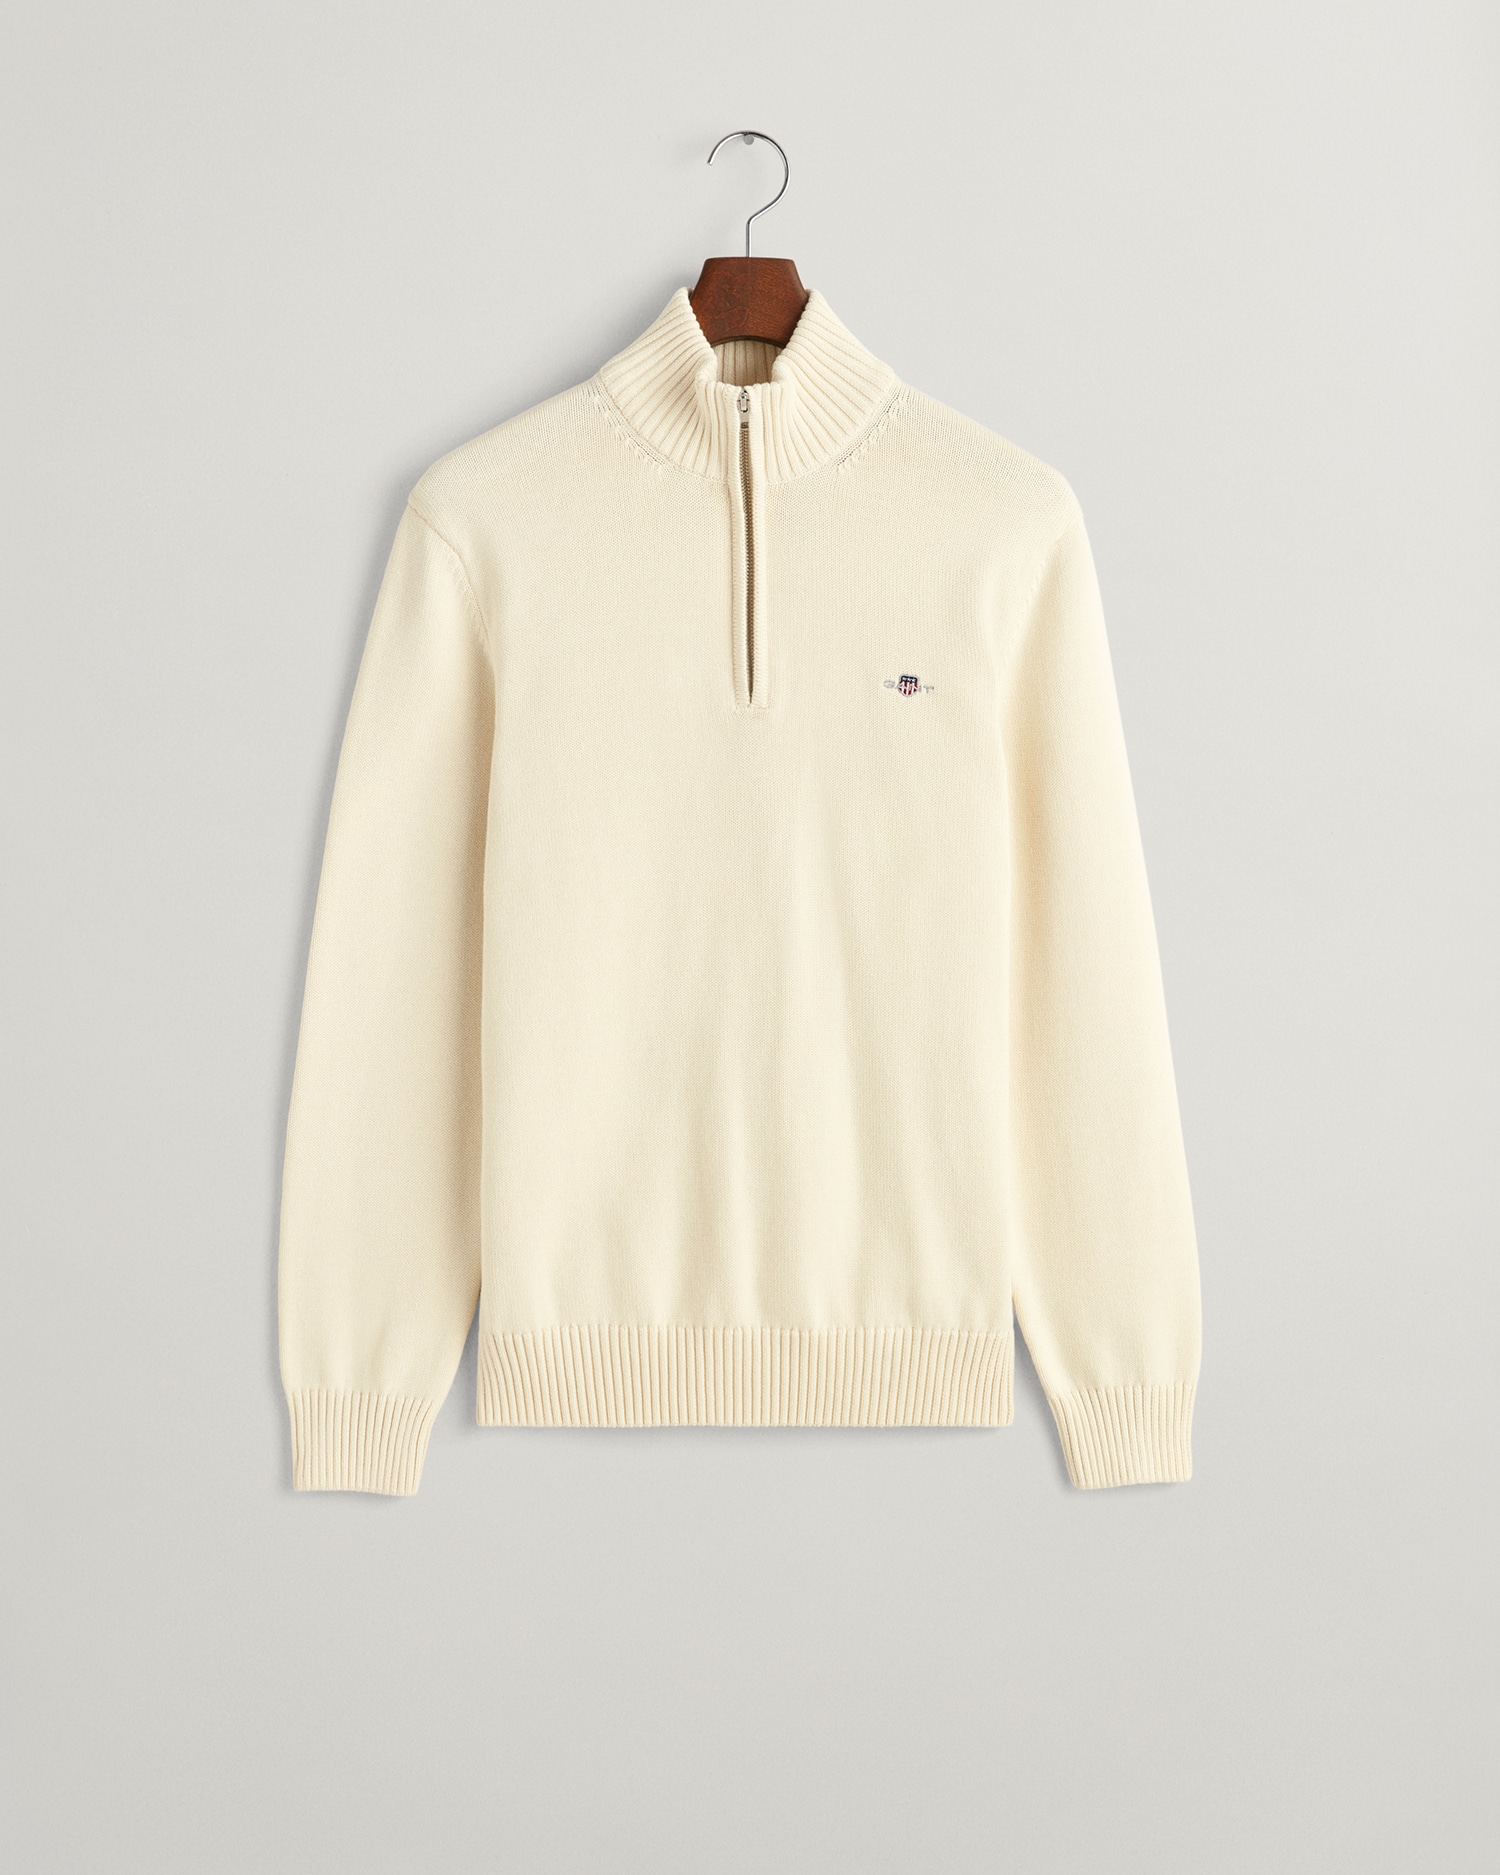 Gant Casual Cotton Half-Zip Sweater in Cream